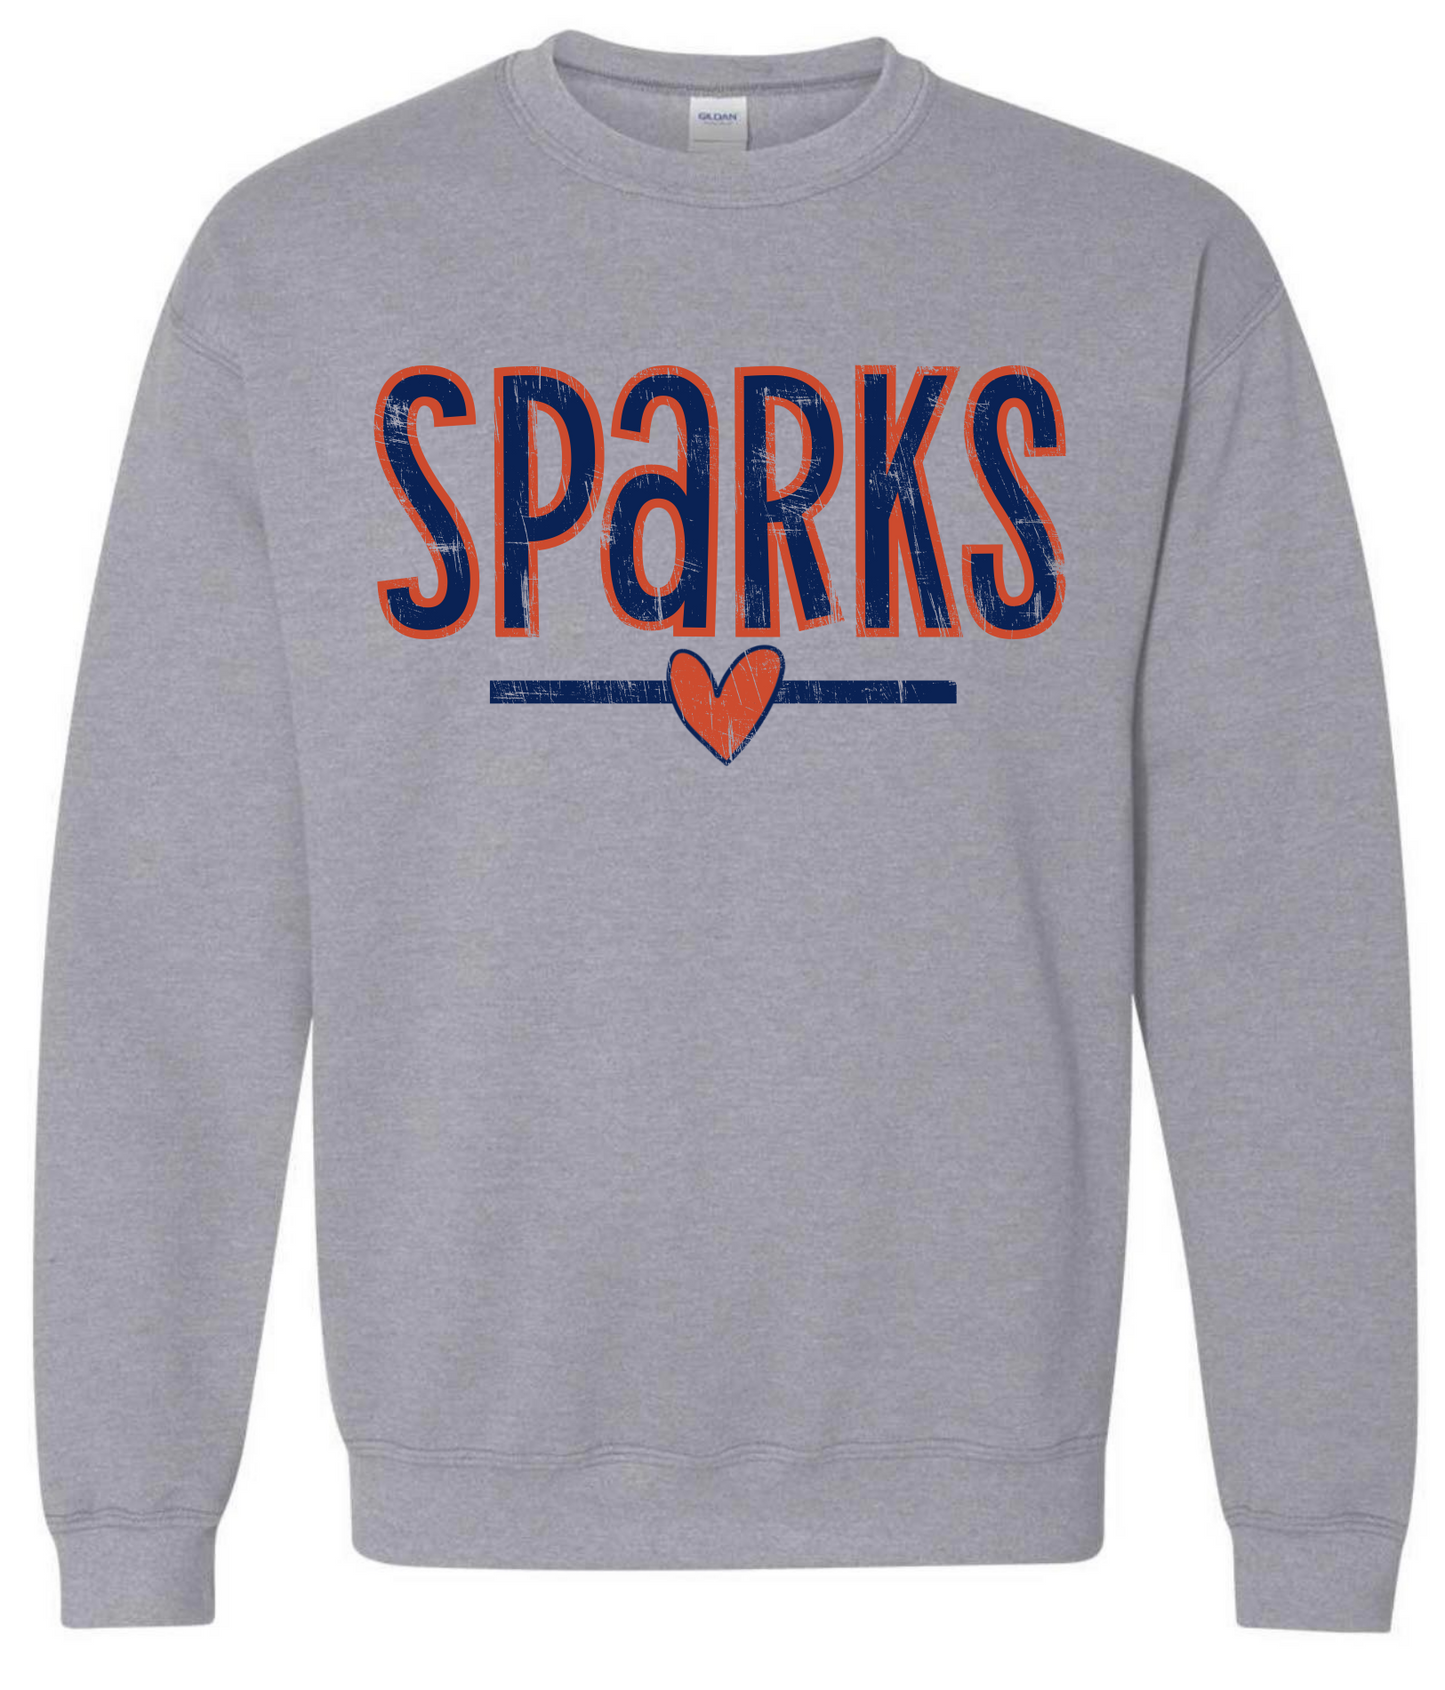 Sparks Heart Sweatshirt